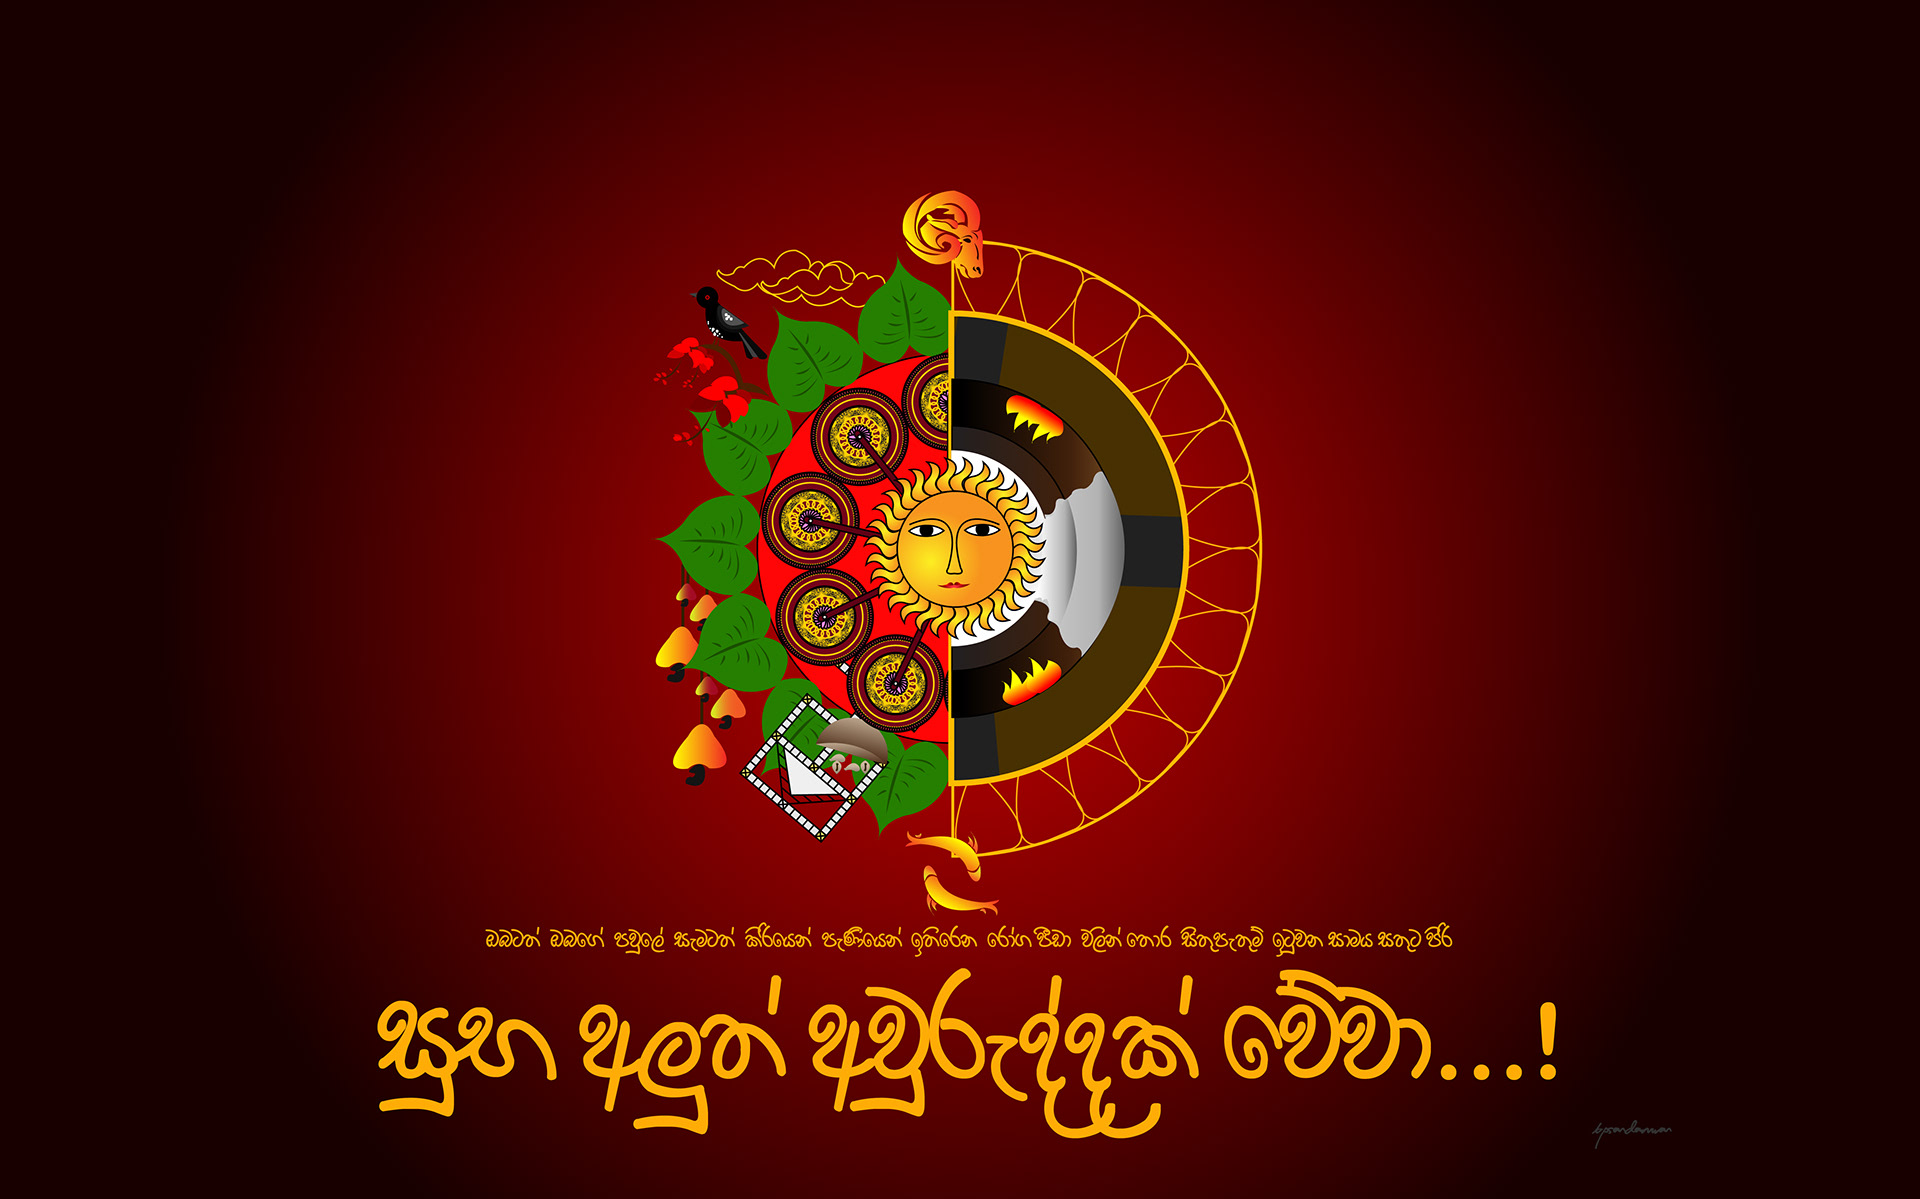 Pasindu Sandaruwan Sinhala & Tamil New year 2020